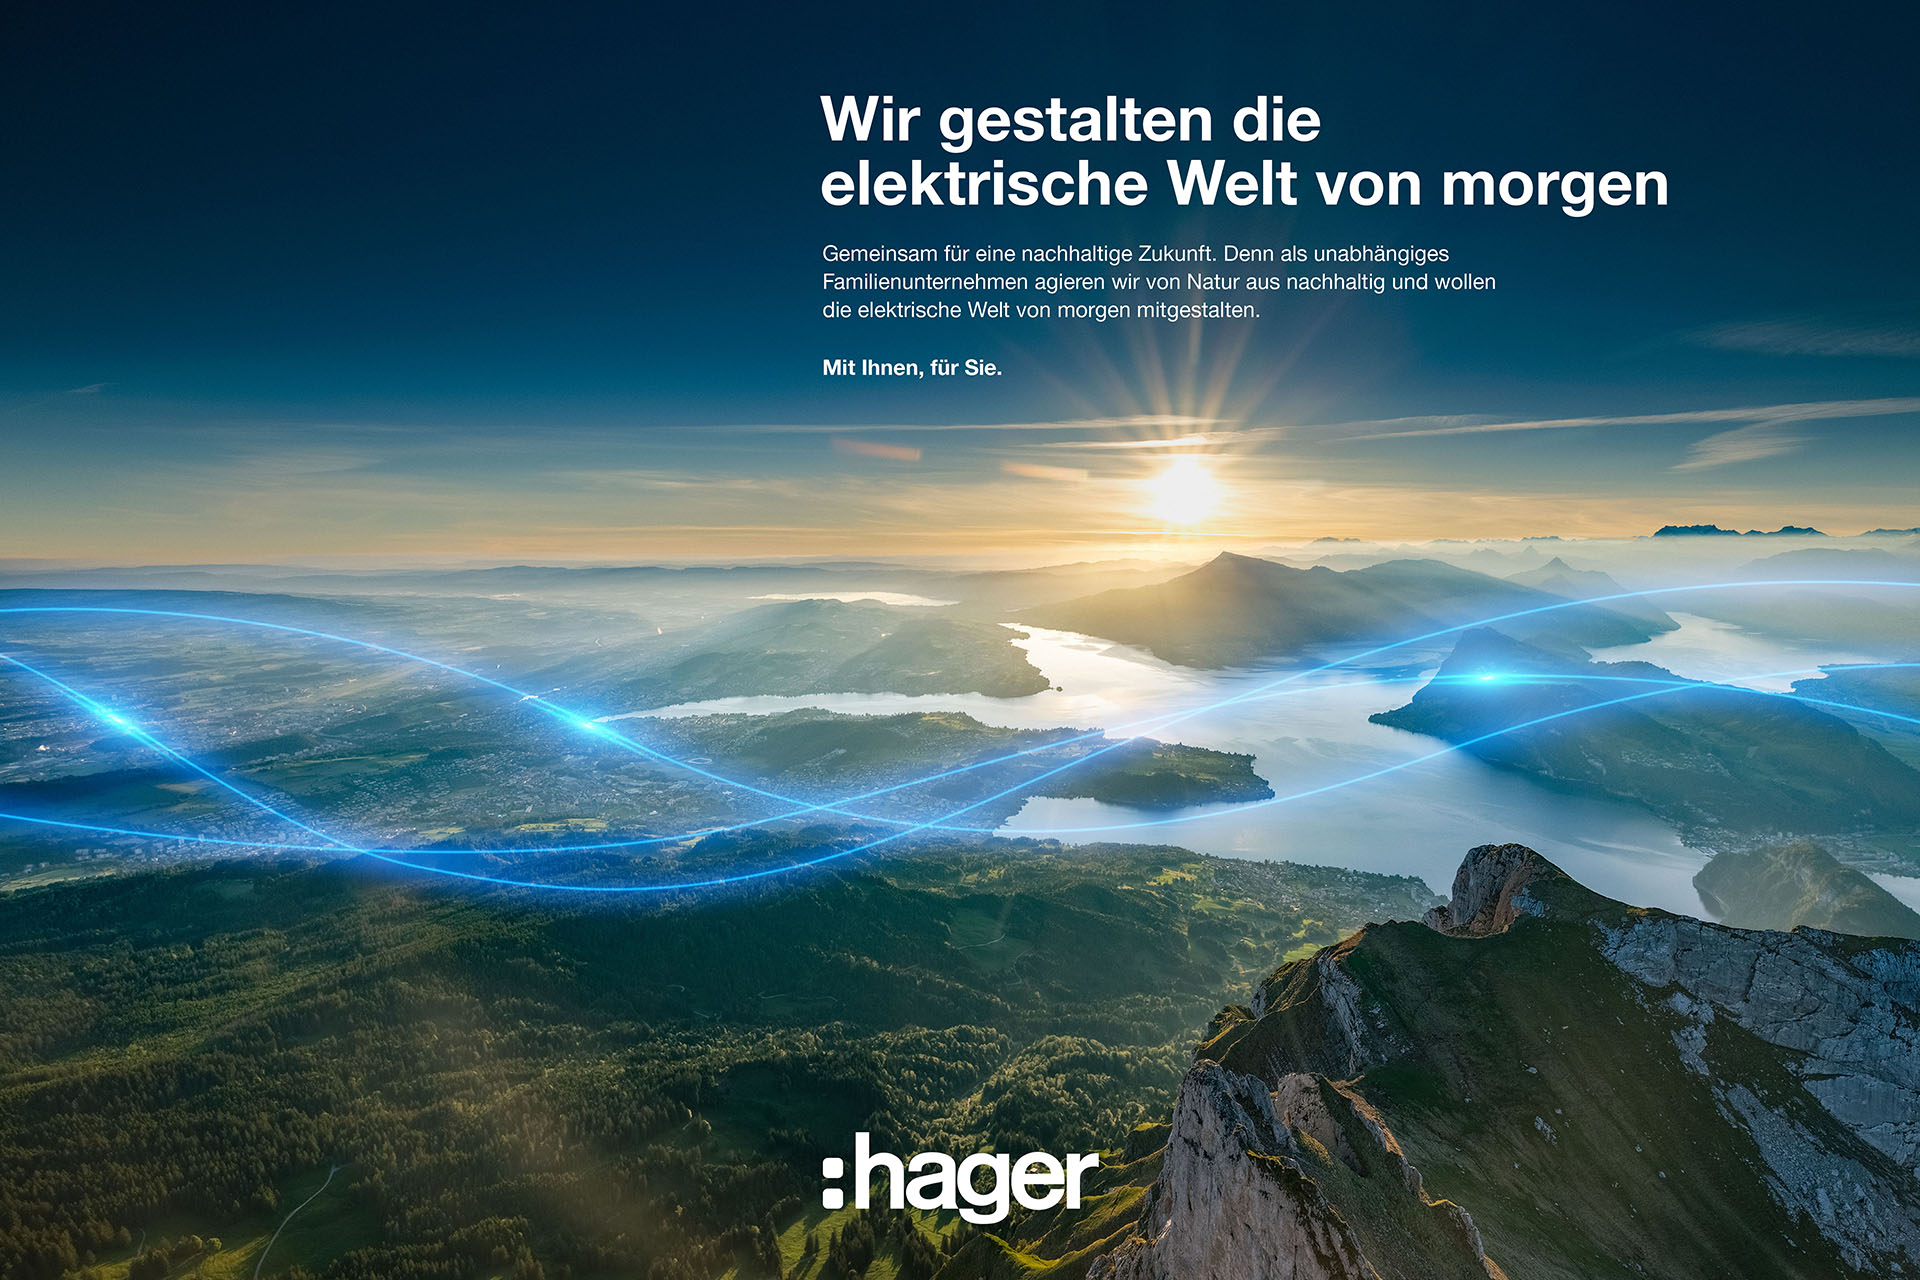 [Translate to English:] Hager kampagne Visual 3